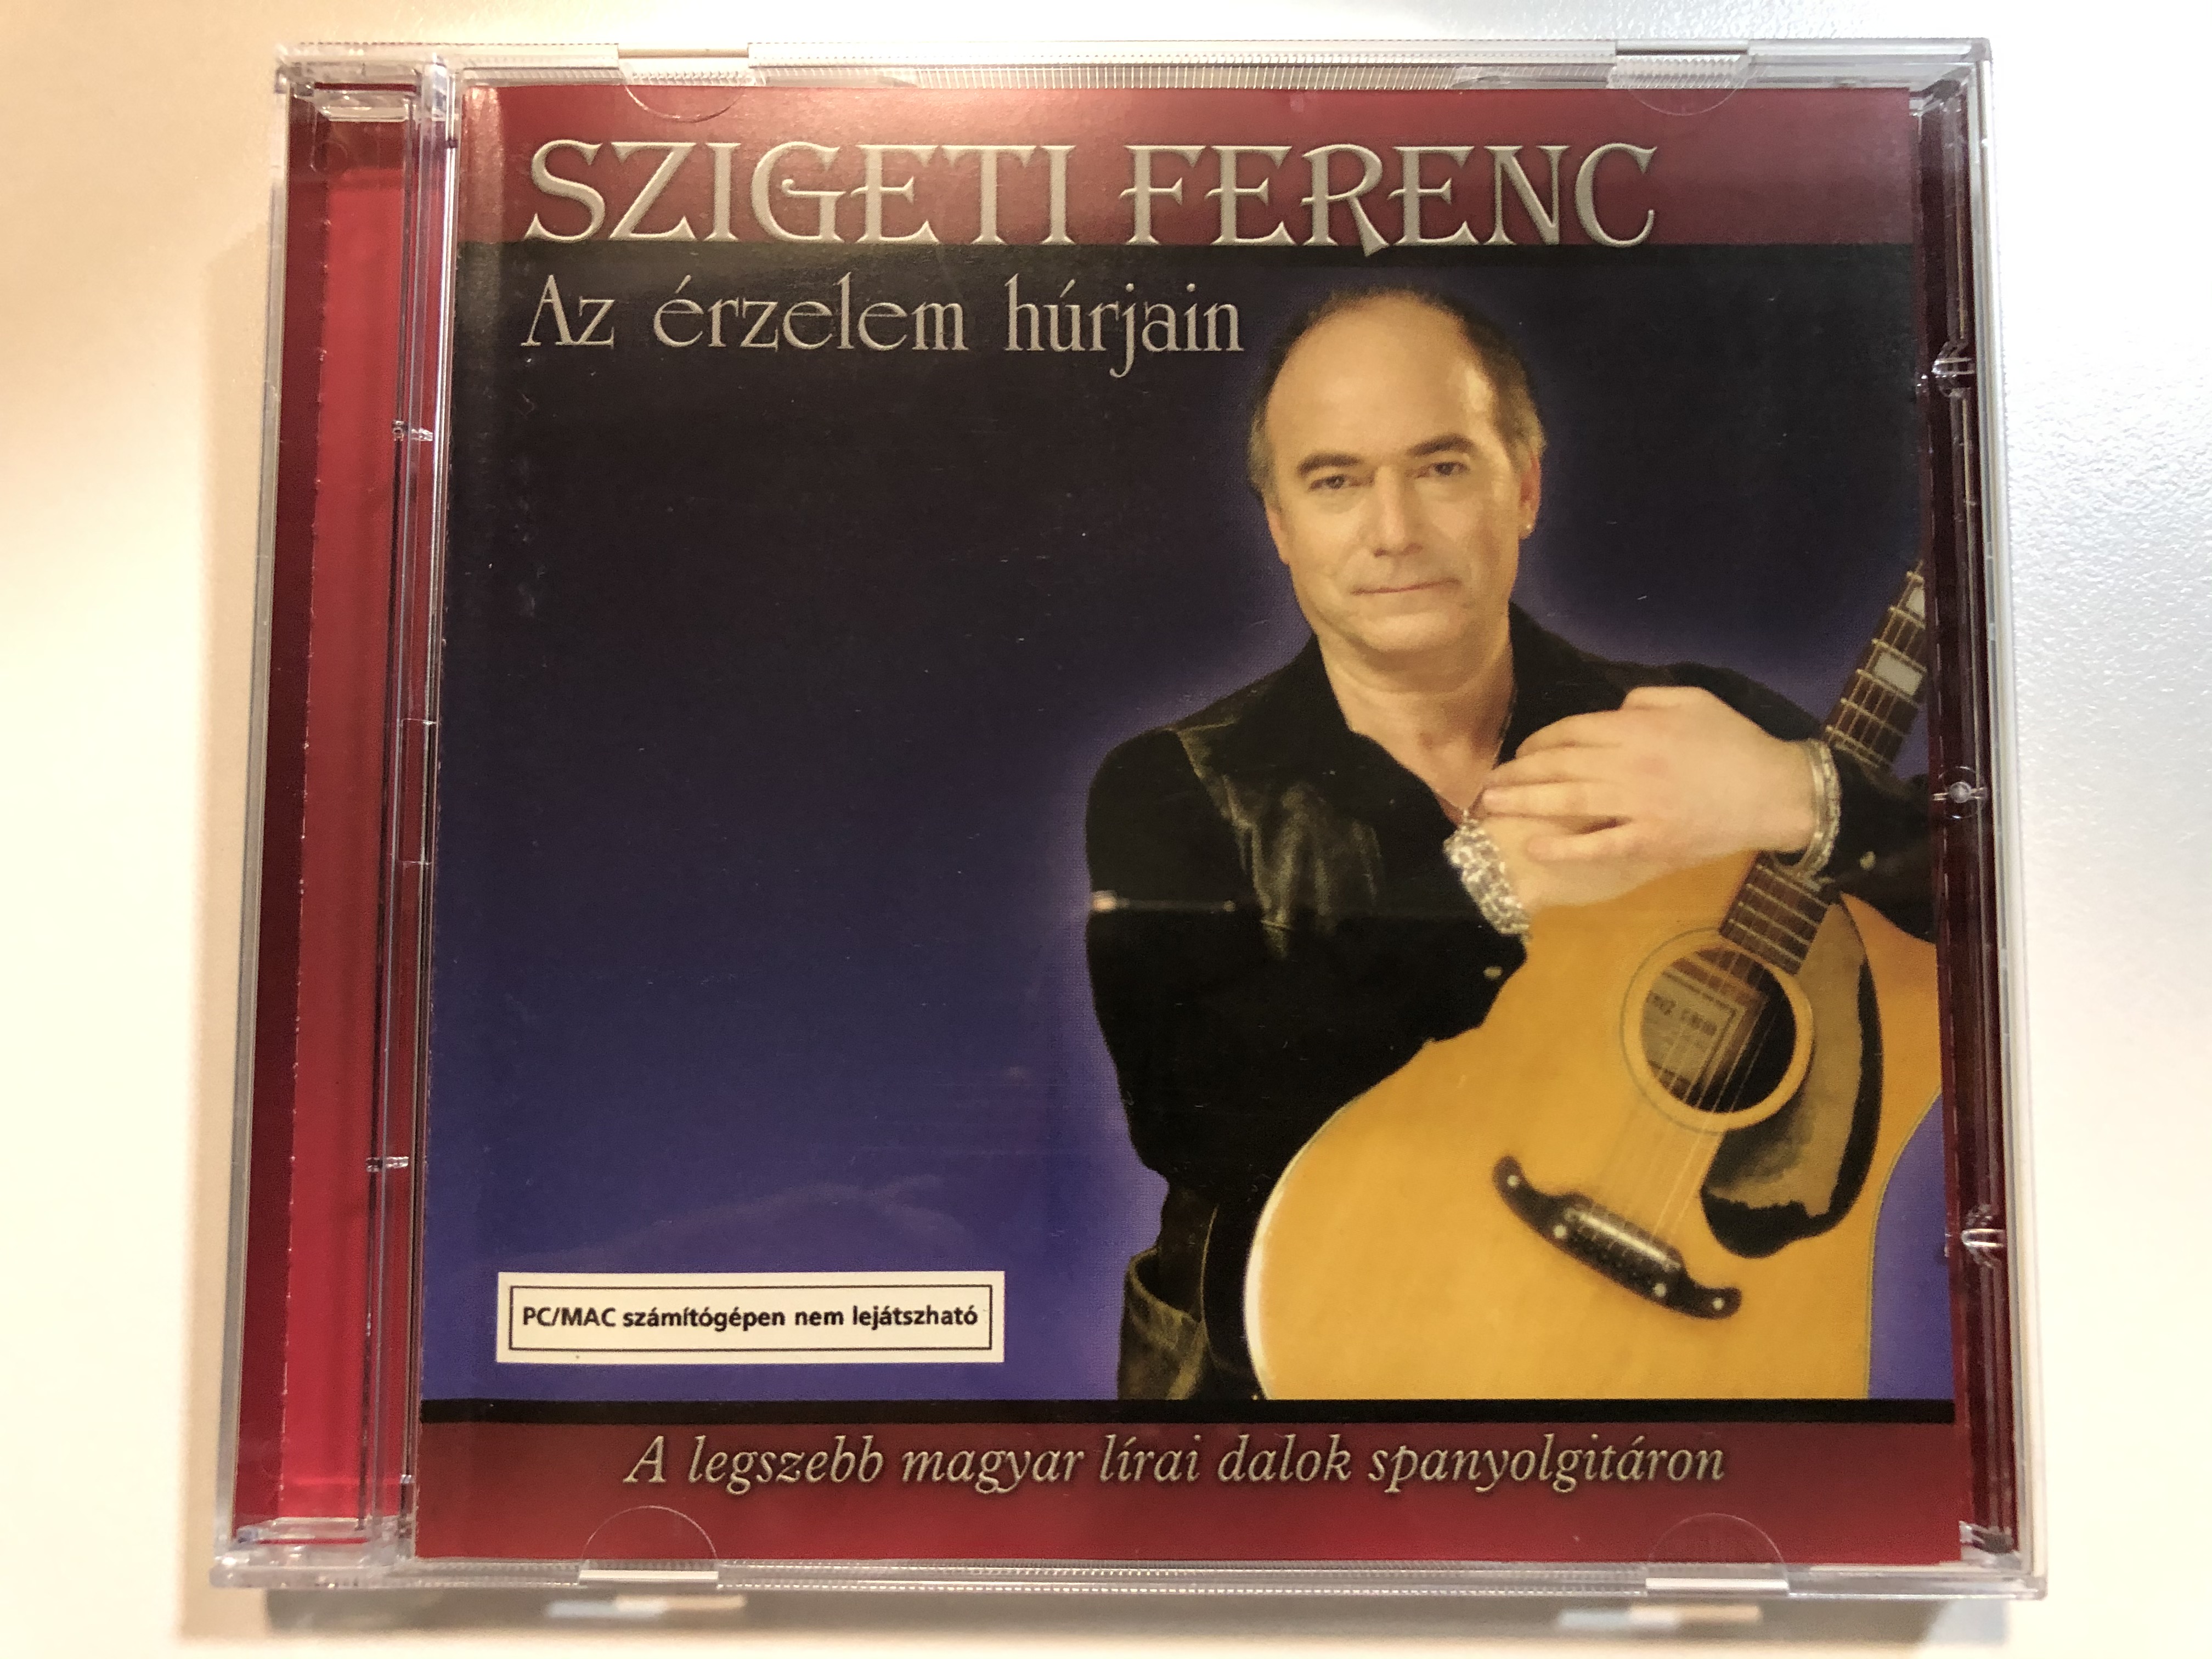 szigeti-ferenc-az-rzelem-h-rjain-a-legszebb-magyar-lirai-dalok-spanyolgitaron-columbia-audio-cd-2002-col-507861-2-1-.jpg